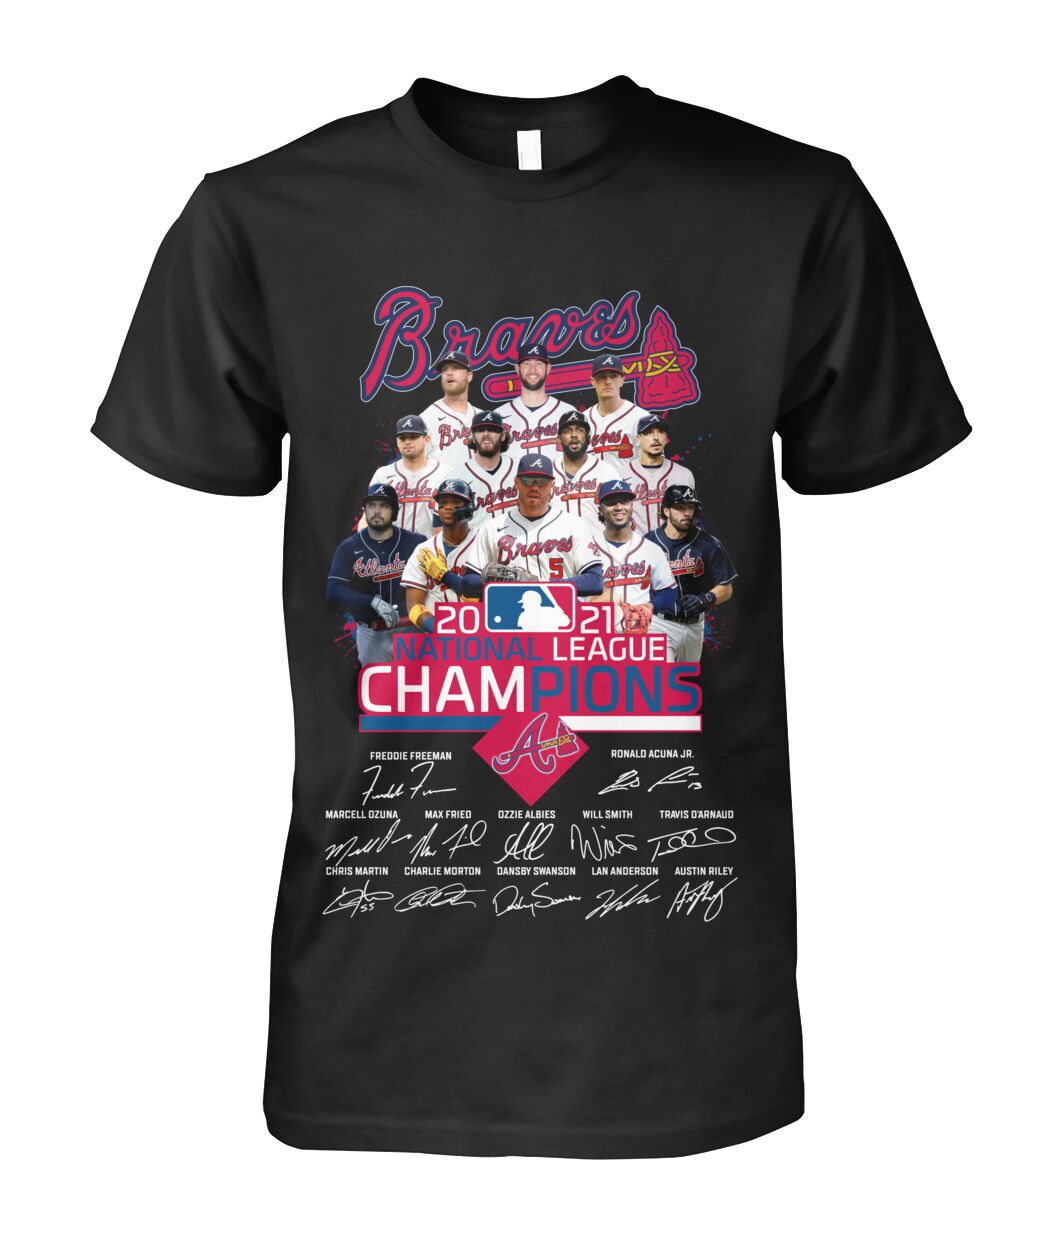 Atlanta Braves 2021 Team Champion Celebration Shirt